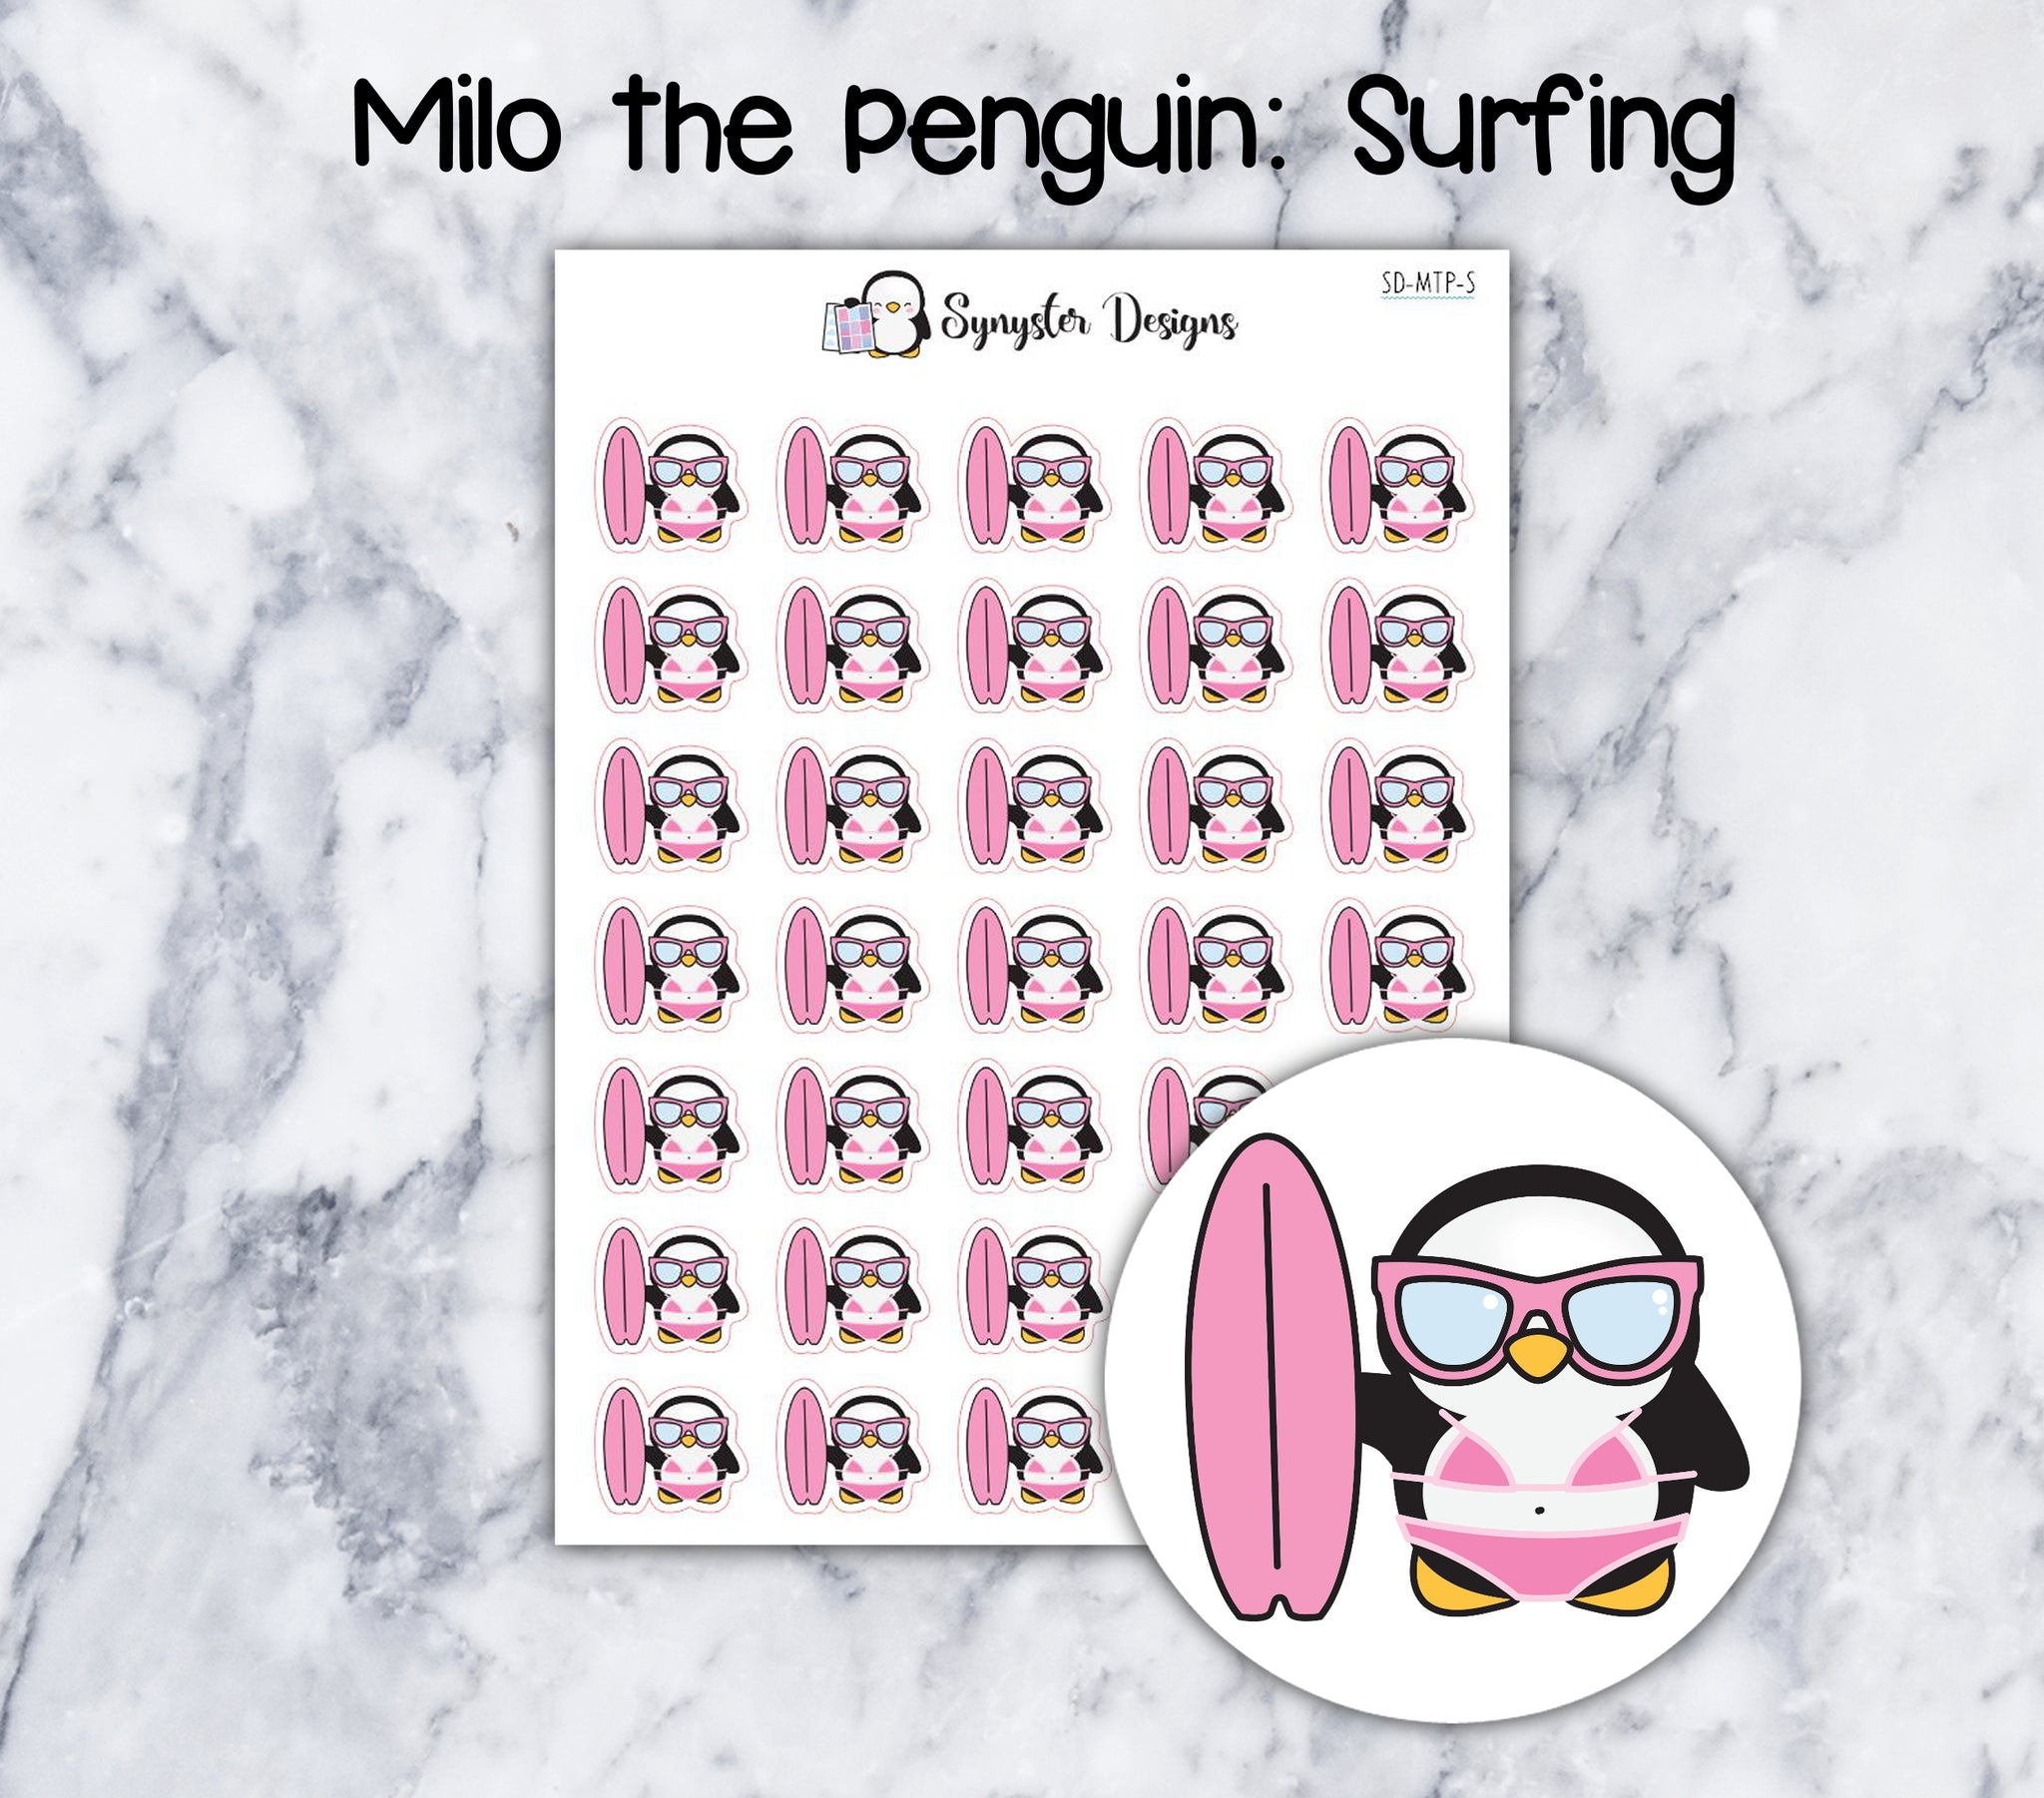 Surfing Milo the Penguin